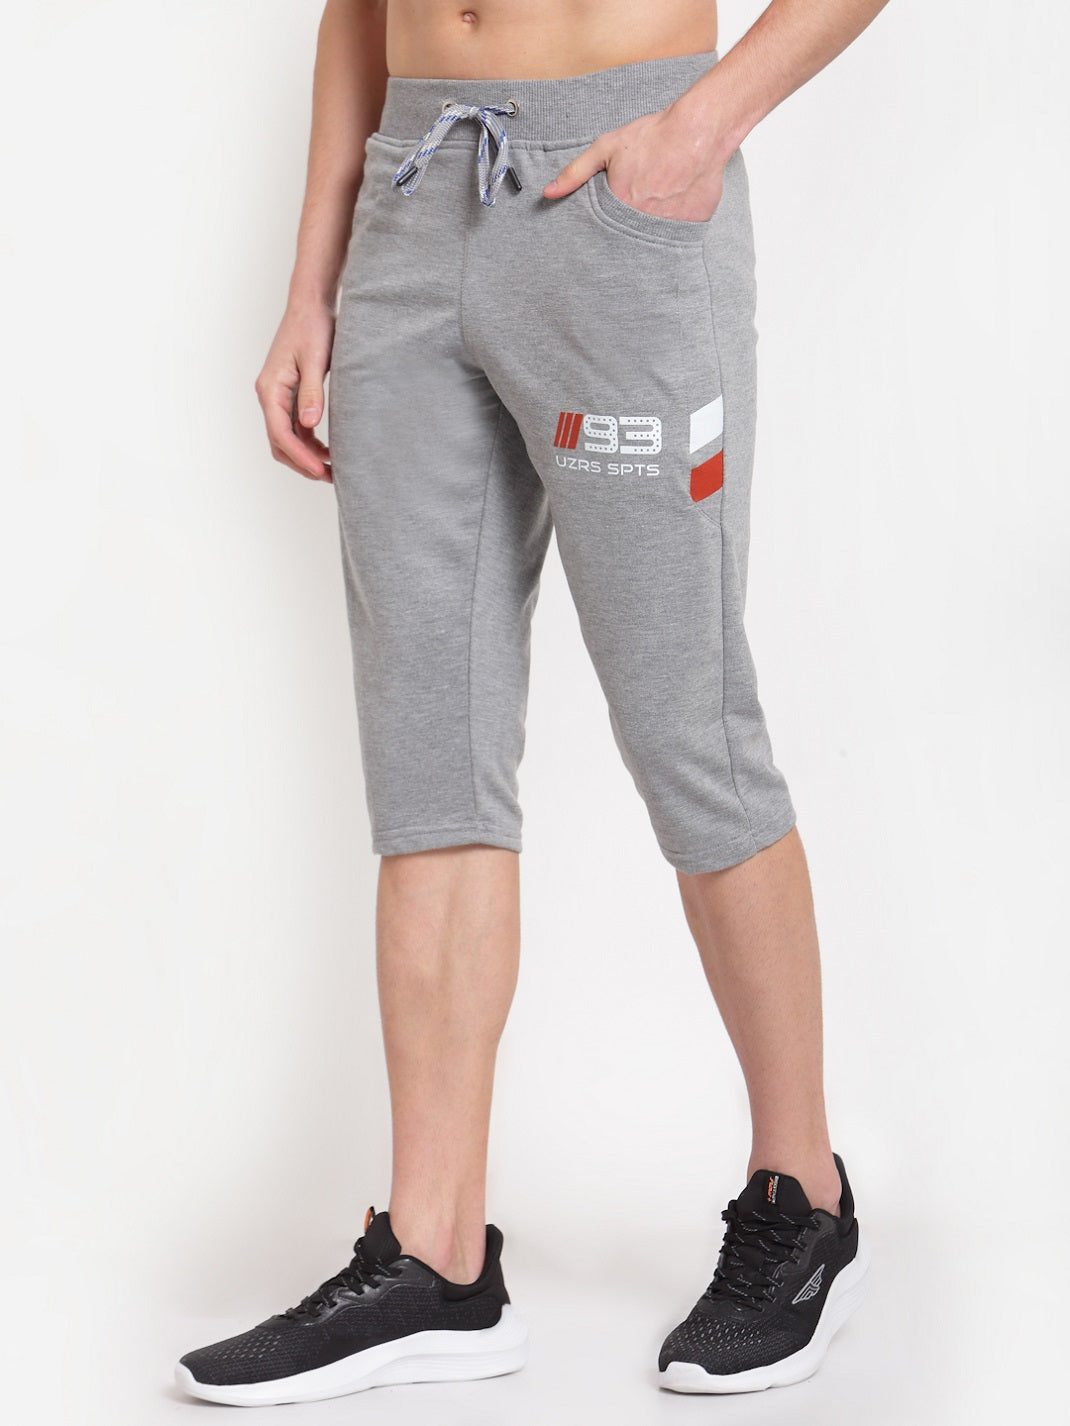 UZARUS Men's Cotton Three Fourth Capri Shorts With Two Zippered Pockets